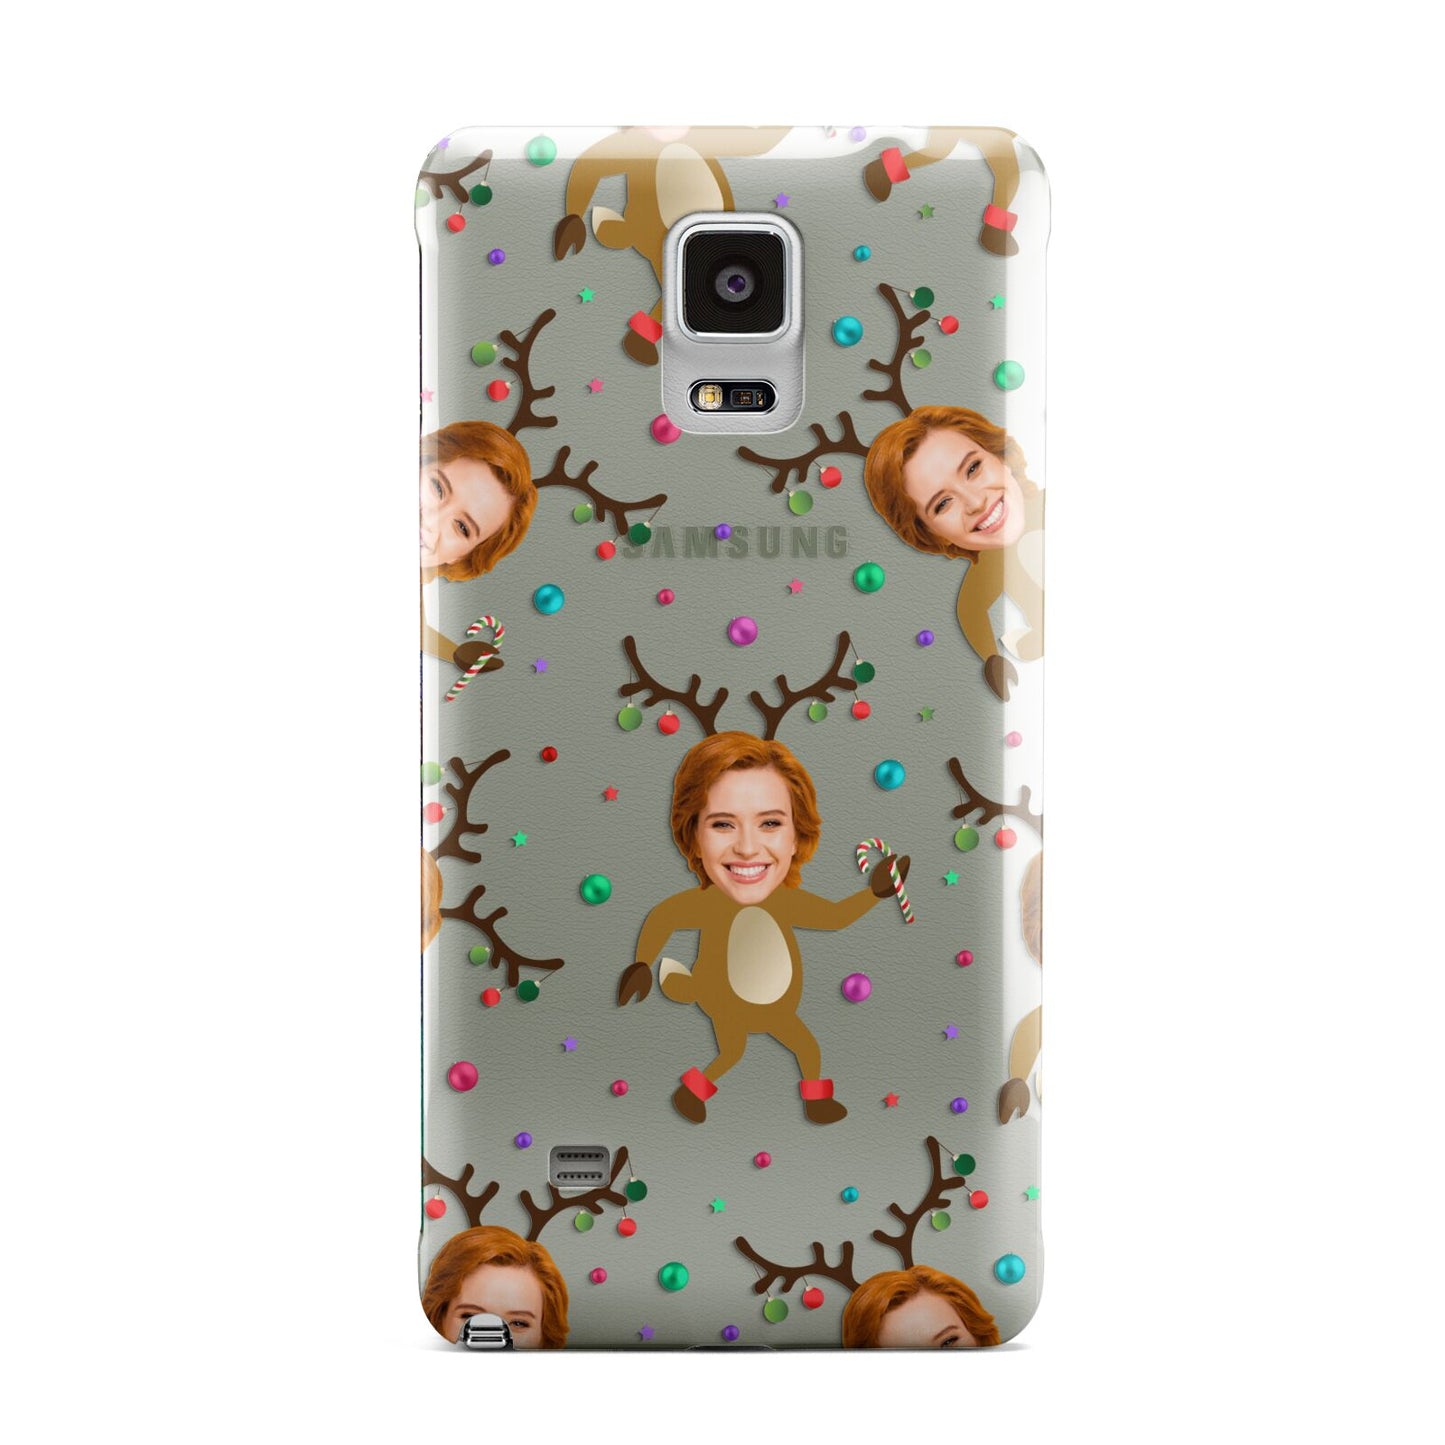 Reindeer Photo Face Samsung Galaxy Note 4 Case